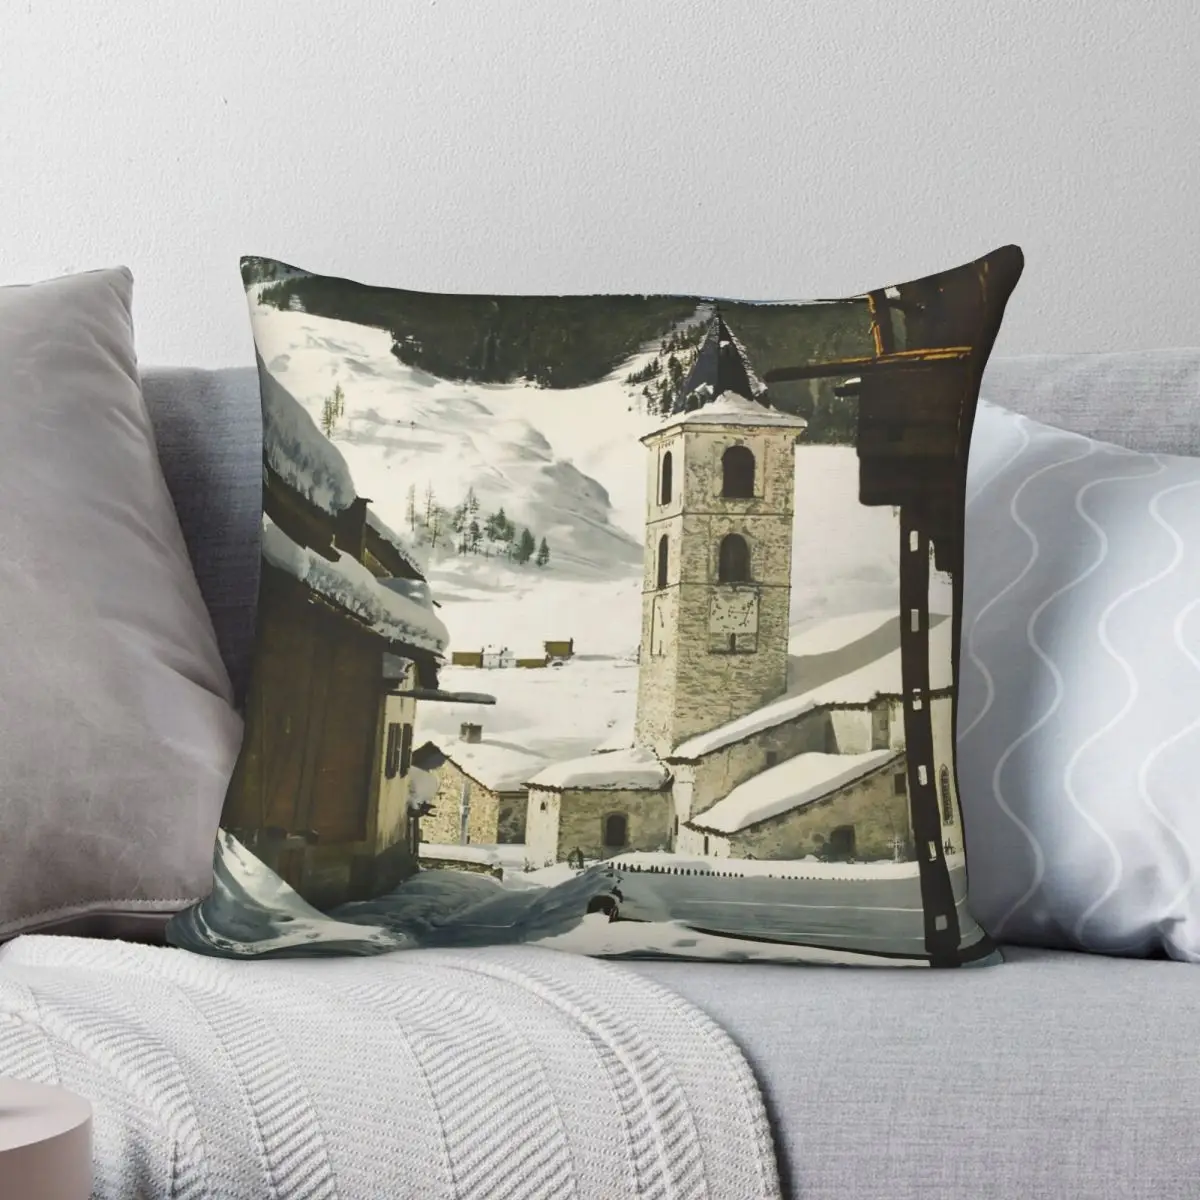 

Valais Швейцария плакат «лыжи» чехол для подушки полиэстер Лен бархат креативный молния Декор Подушка Чехол для дивана Подушка Наволочка 45x45